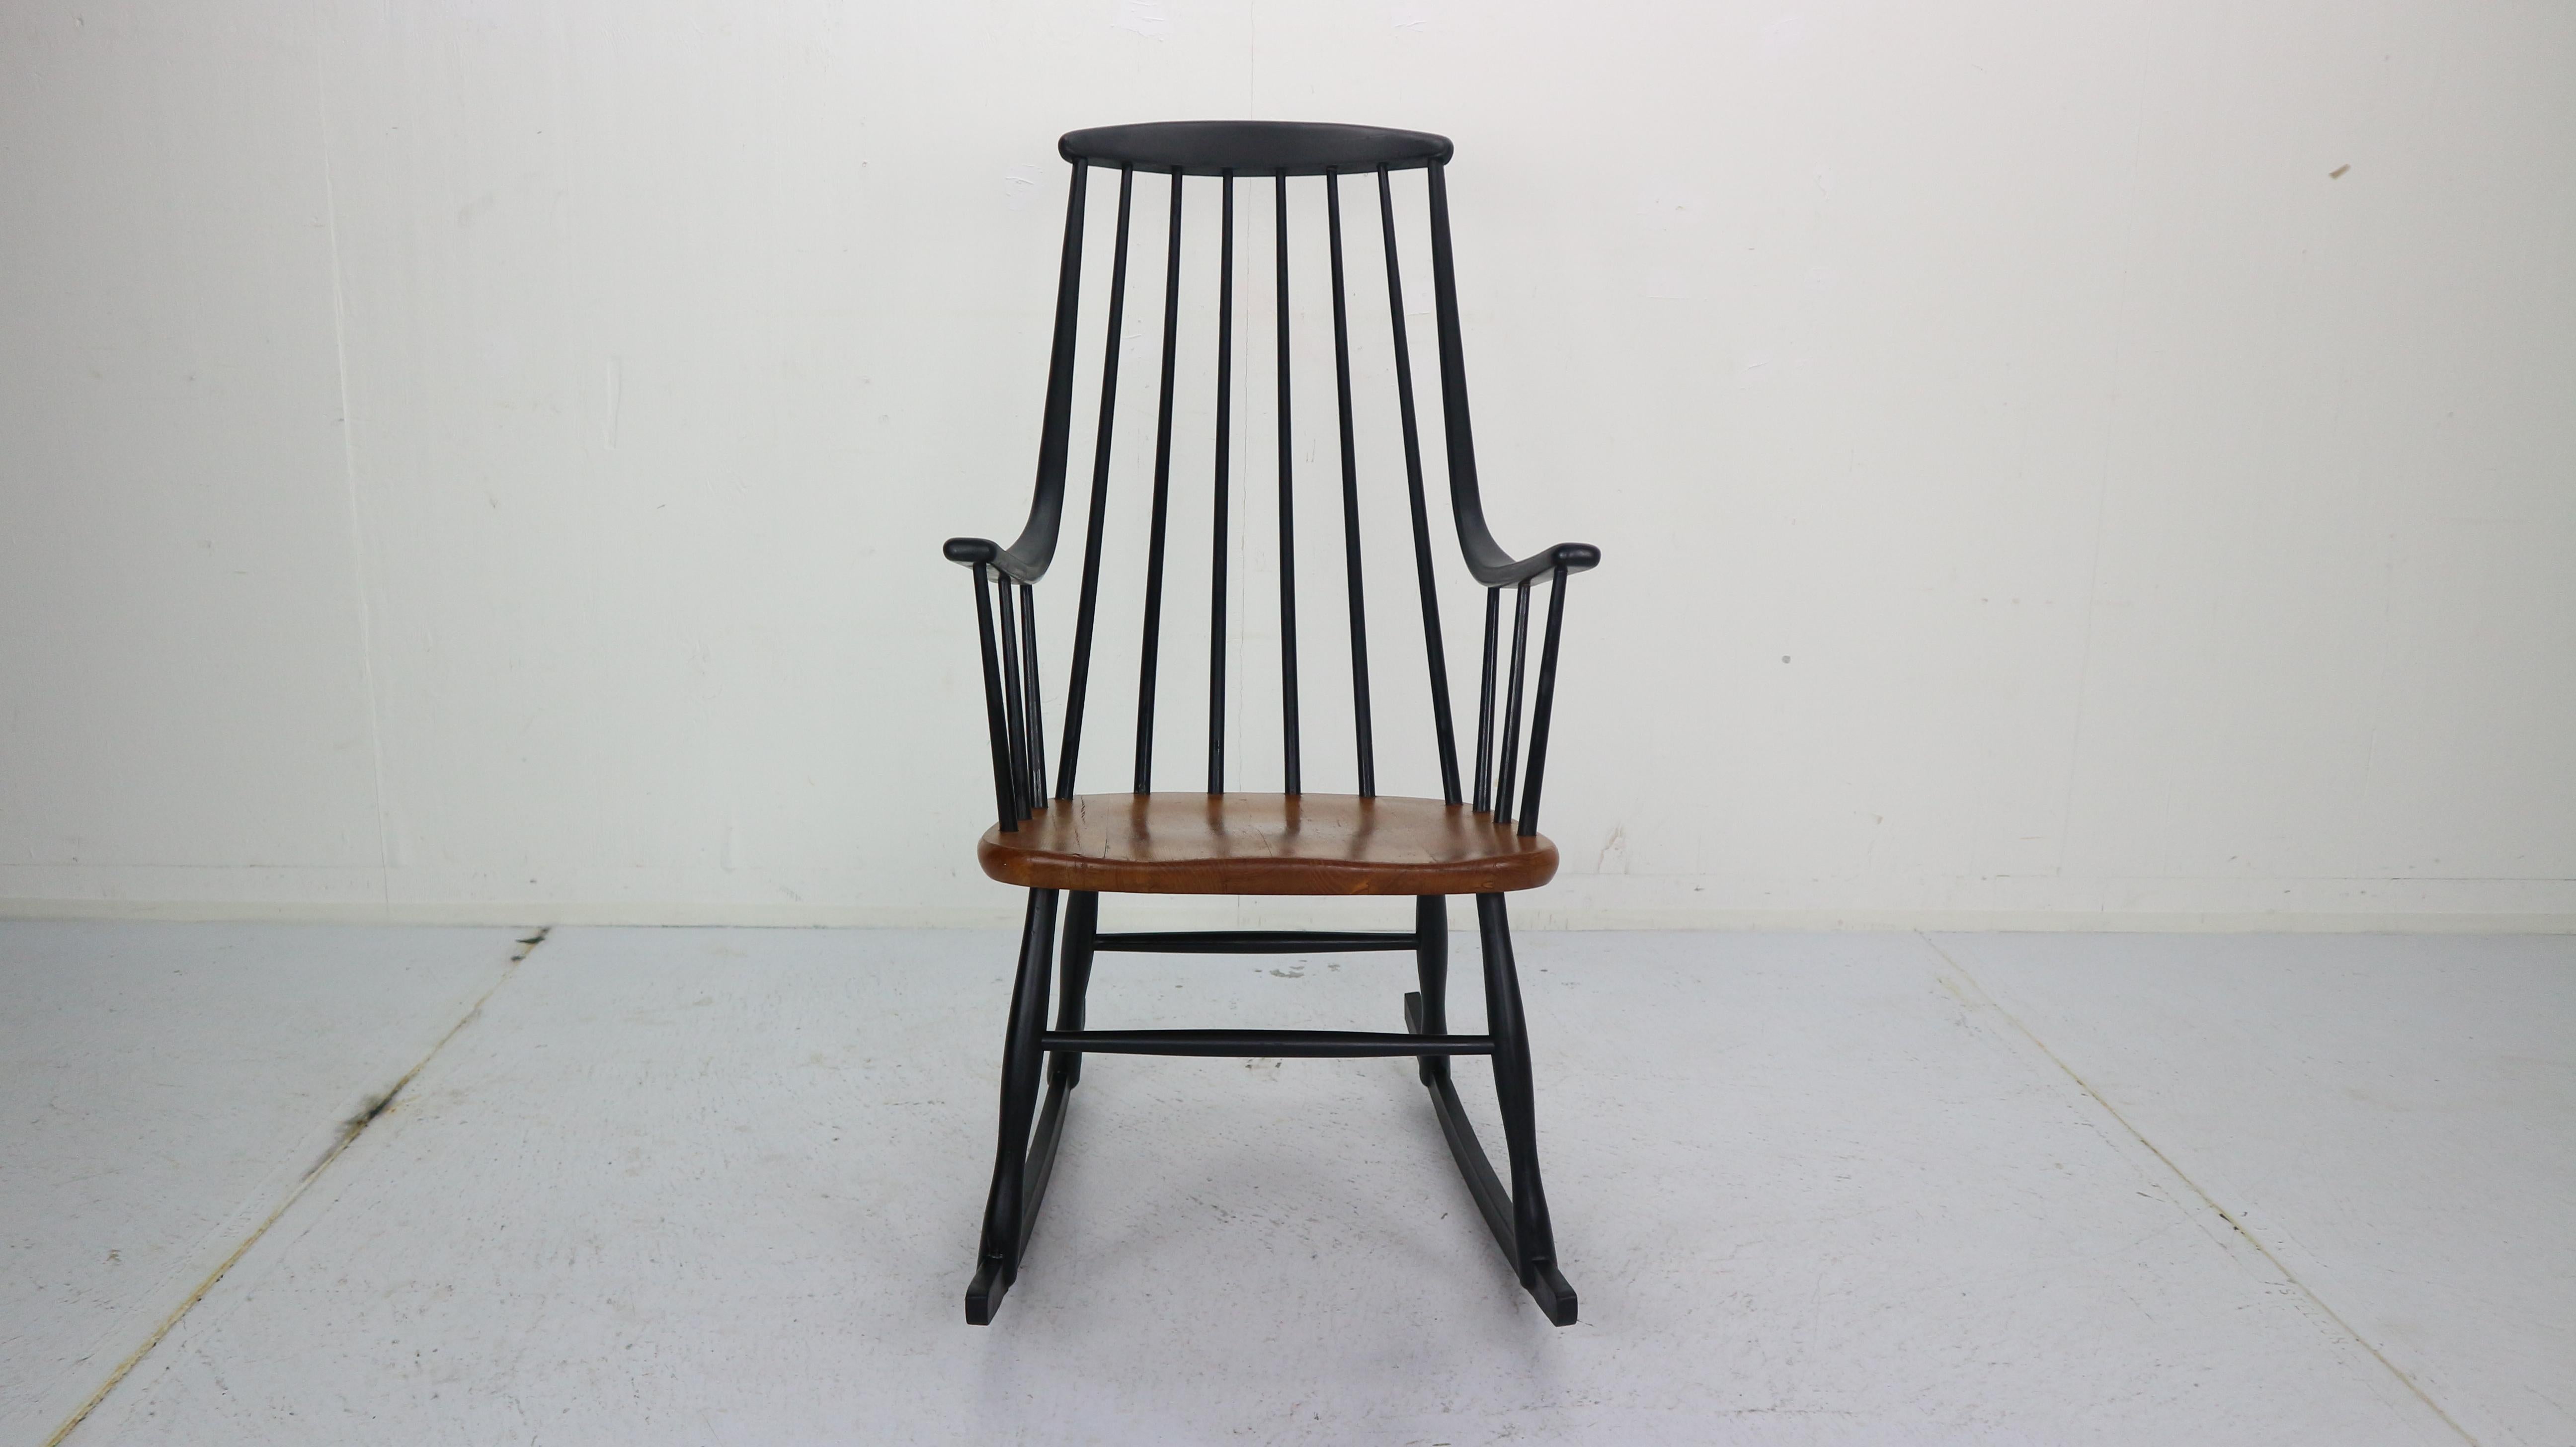 Scandinavian Modern ‘Grandessa’ Wooden Rocking Chair by Lena Larsson For Nesto, 1960s